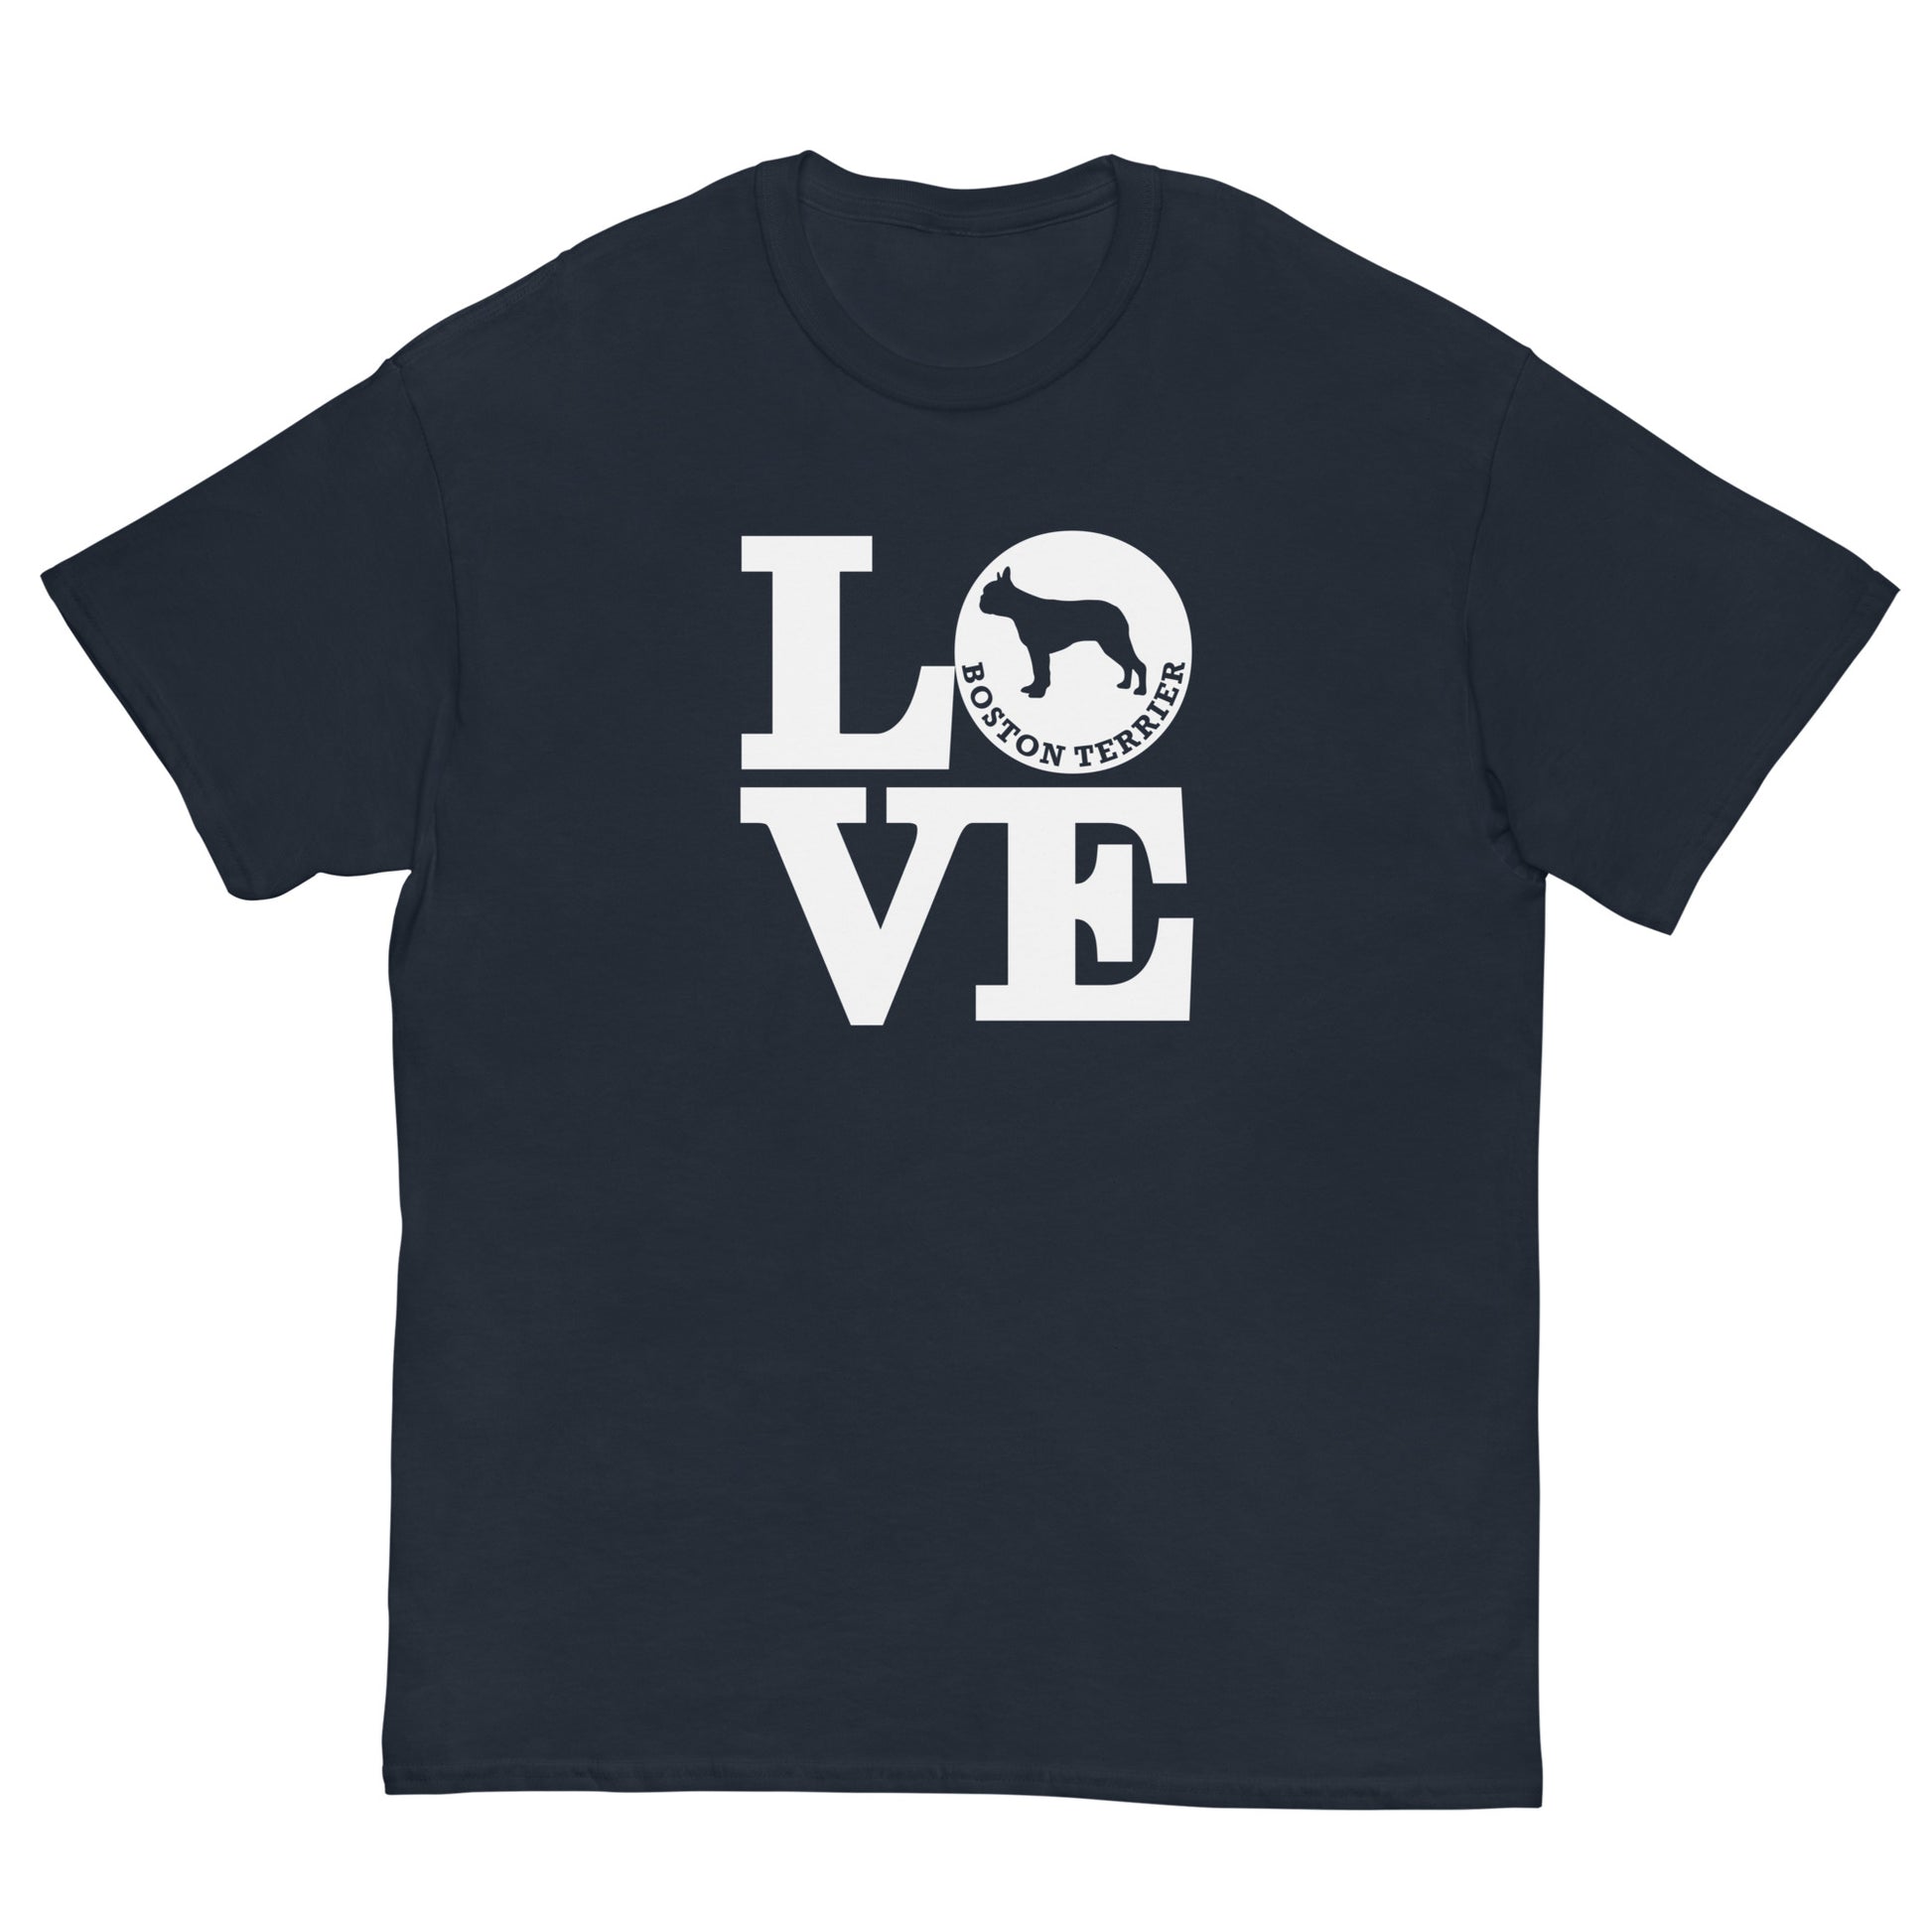 Boston Terrier Love men’s navy t-shirt by Dog Artistry.